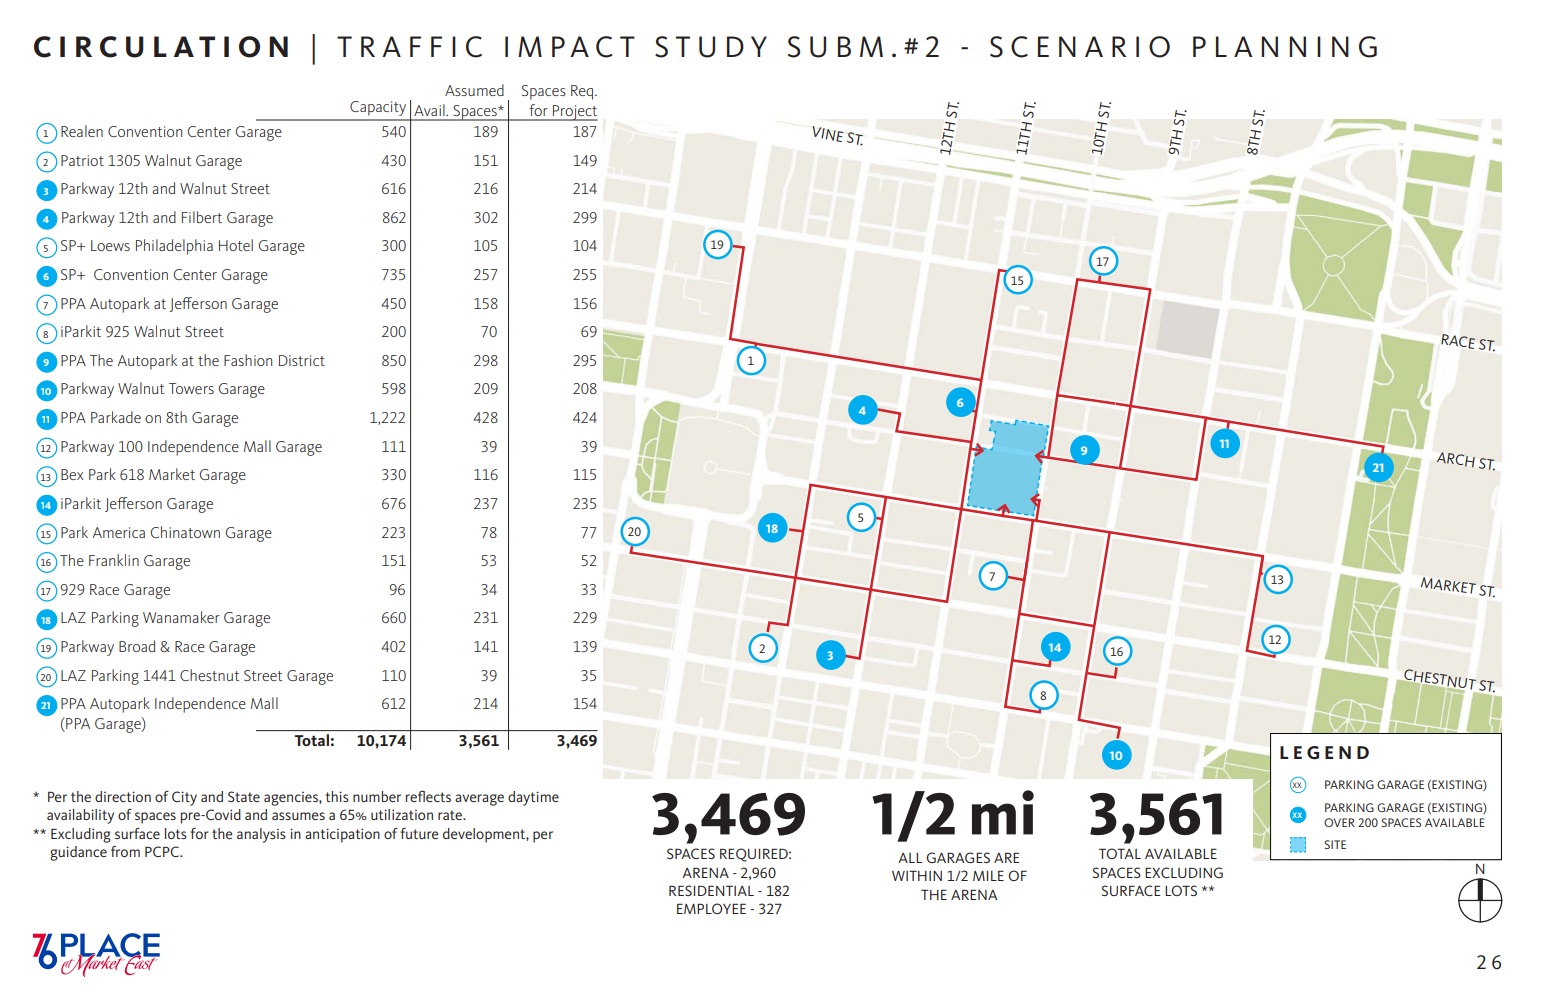 76Place-April24-12 Traffic Impact Study 2